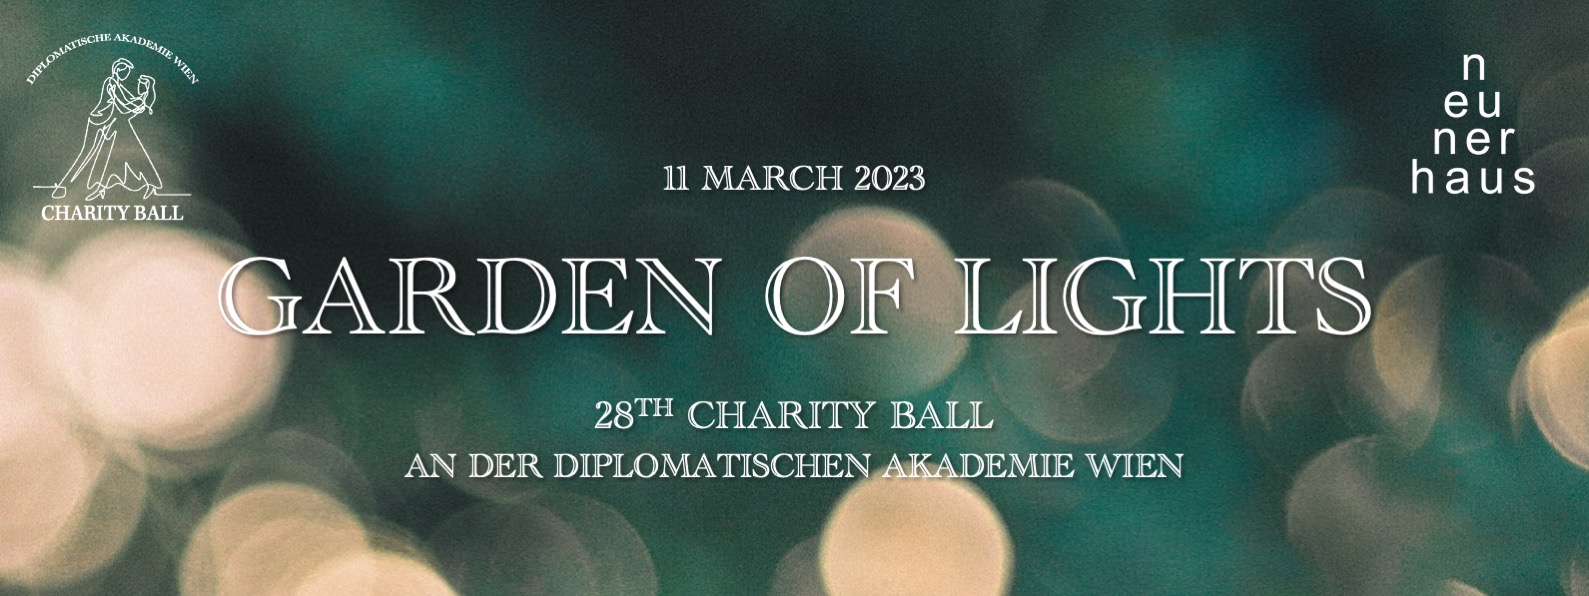 28th Charity Ball an der Diplomatischen Akademie Wien